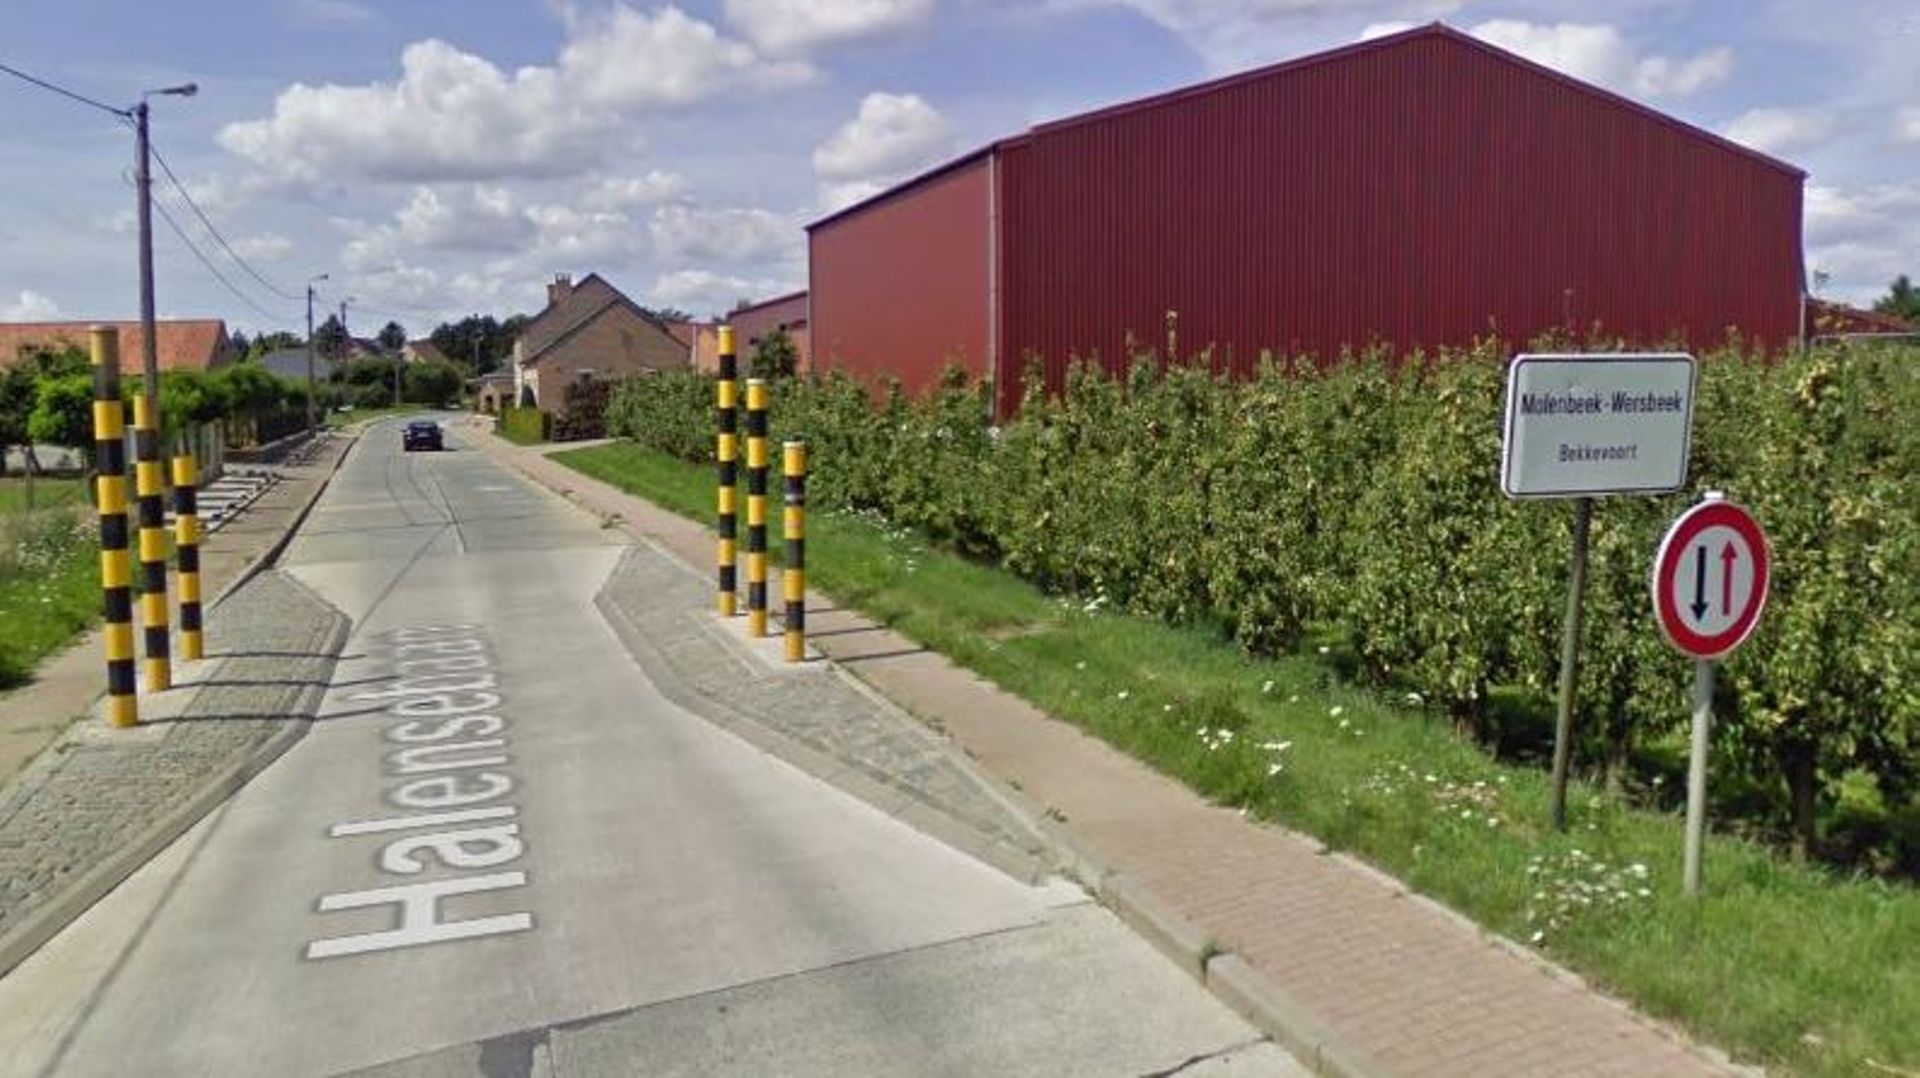 L'entrée dans Molenbeek-Wersbeek, en Brabant flamand.